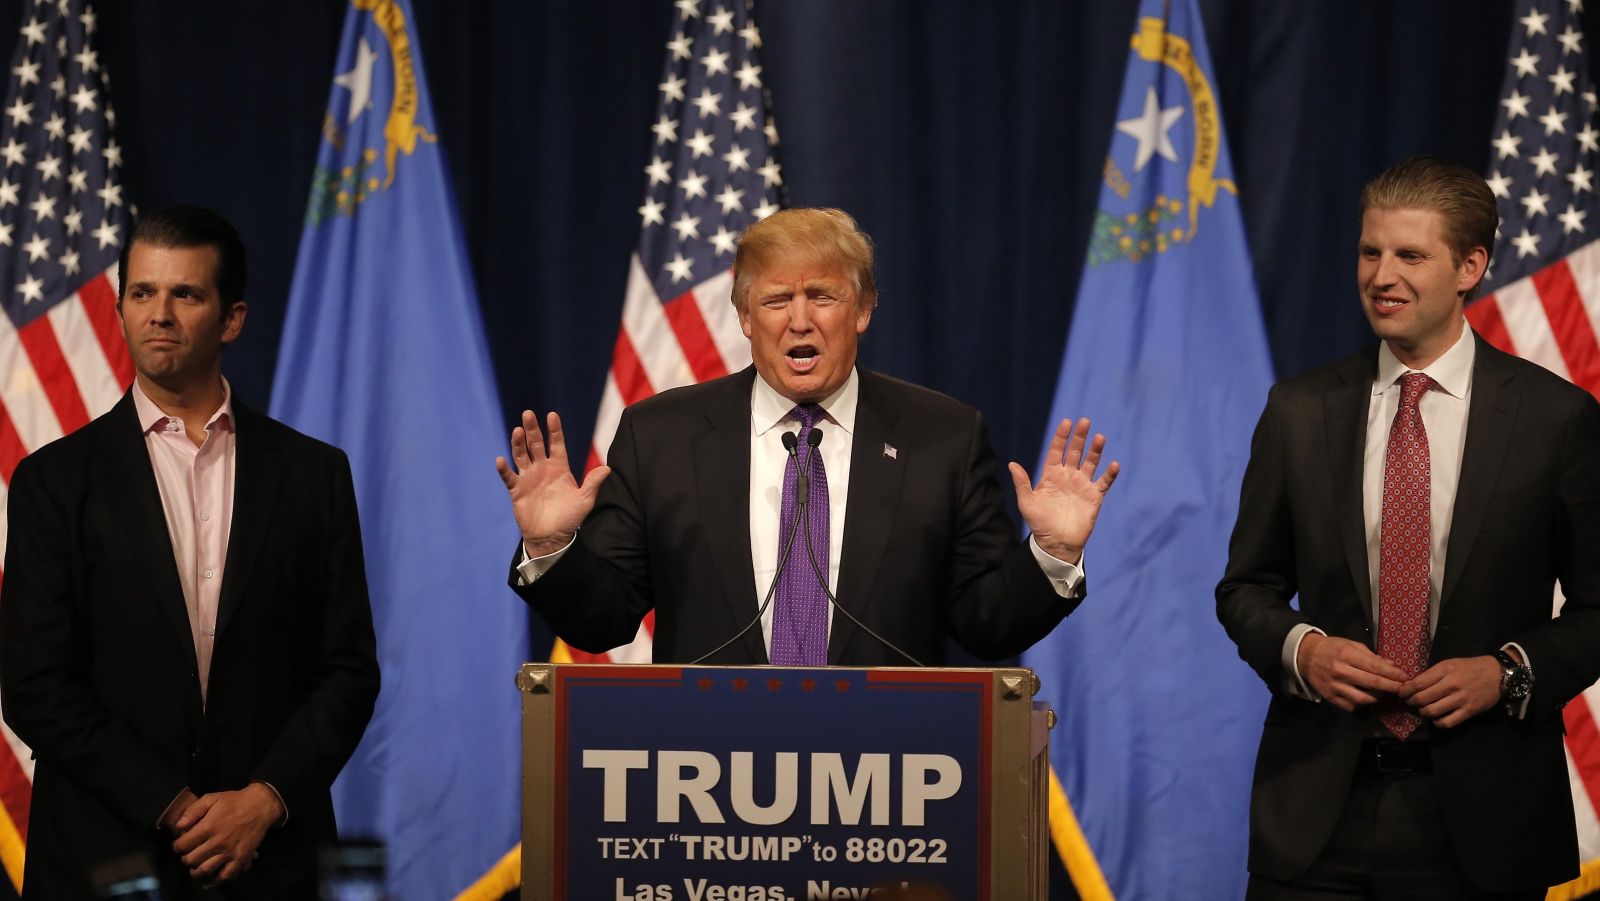 Trump victory speech in Nevada